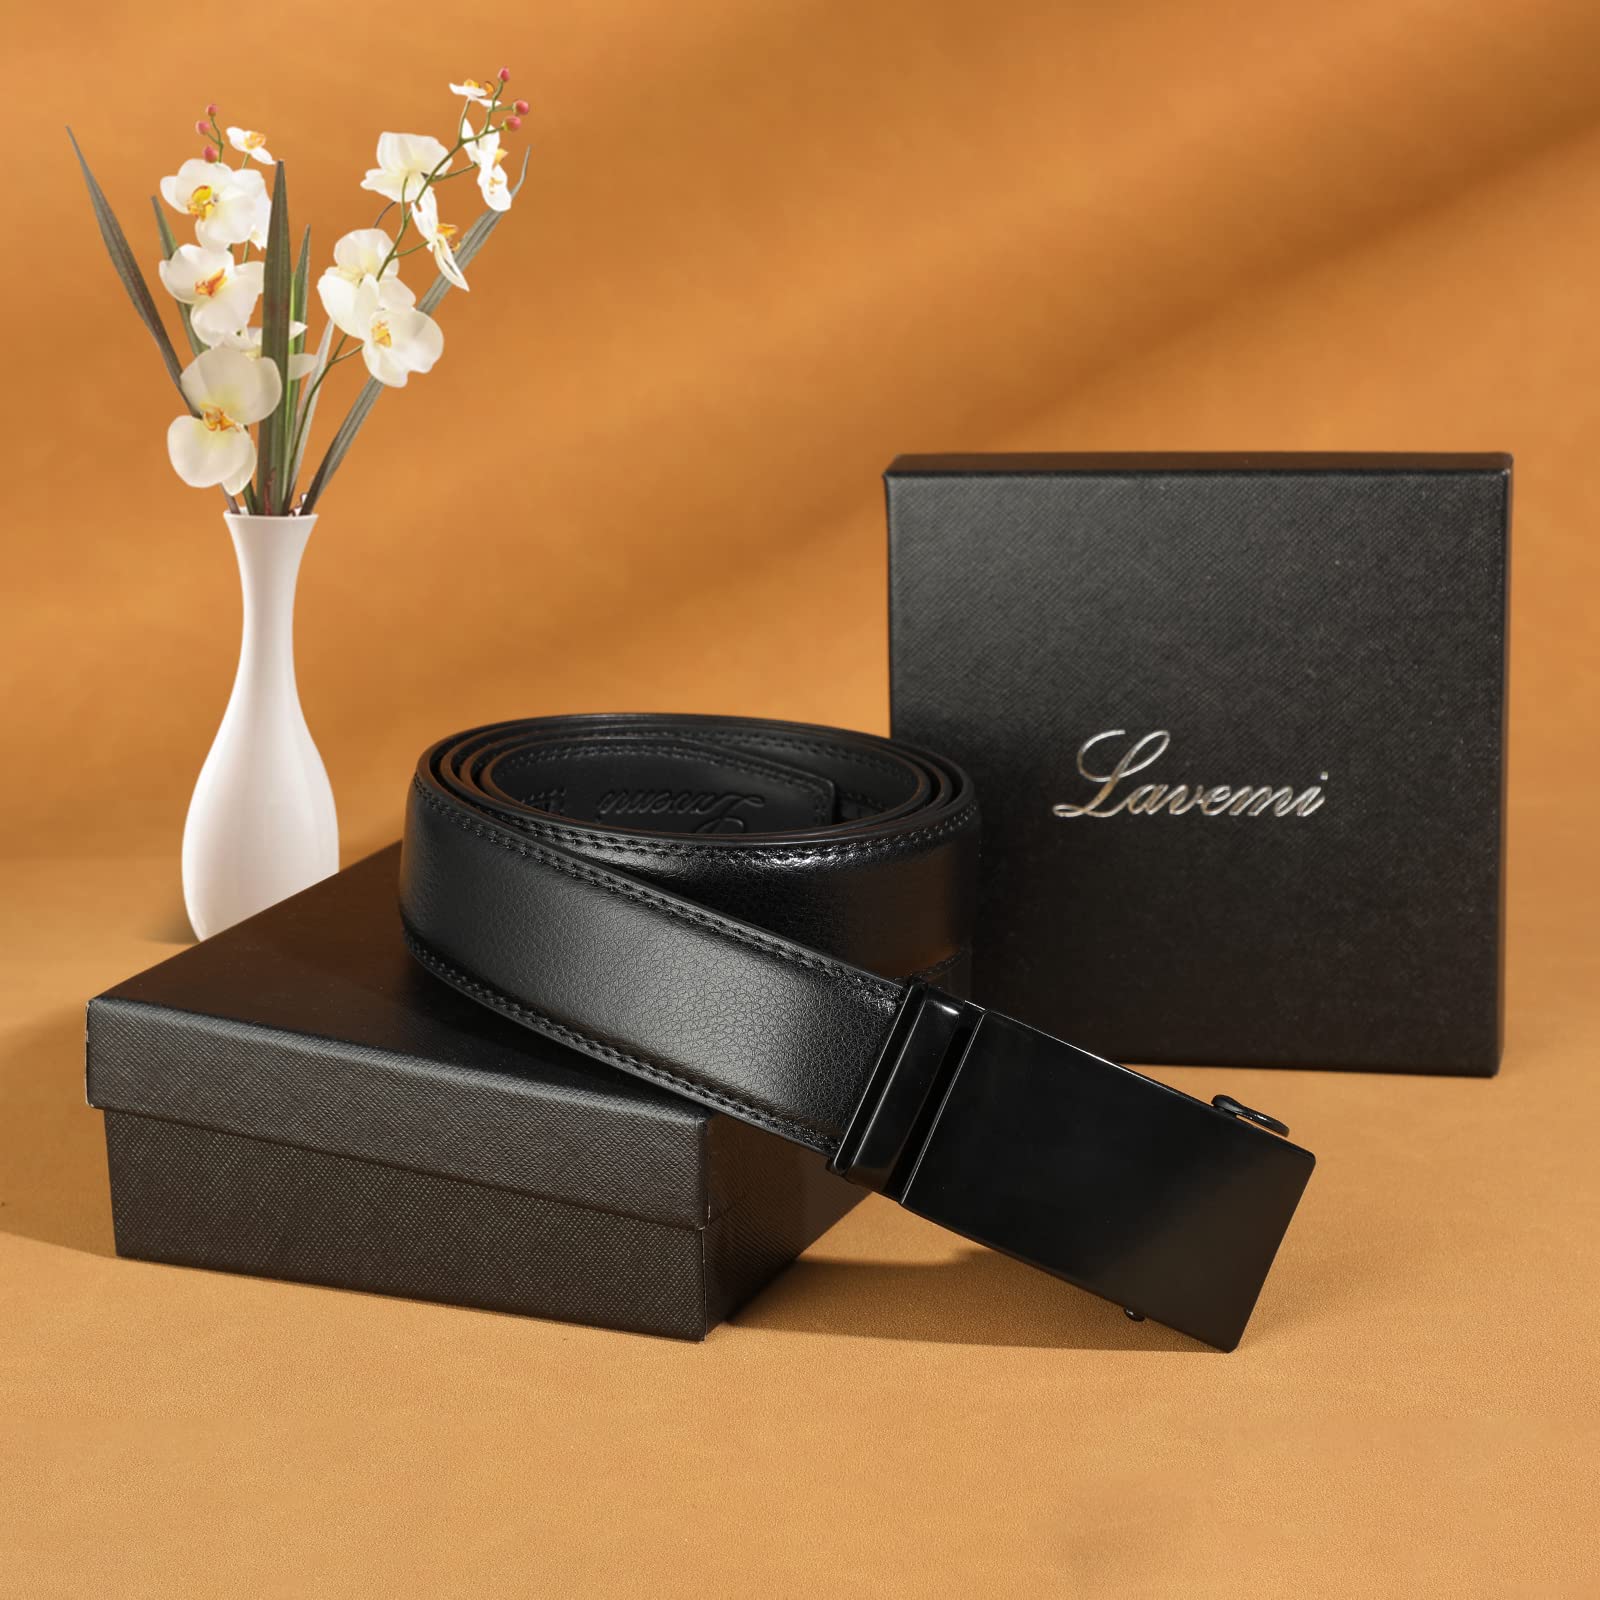 Lavemi Men's Real Leather Ratchet Dress Casual Belt, Cut to Exact Fit, Elegant Gift Box